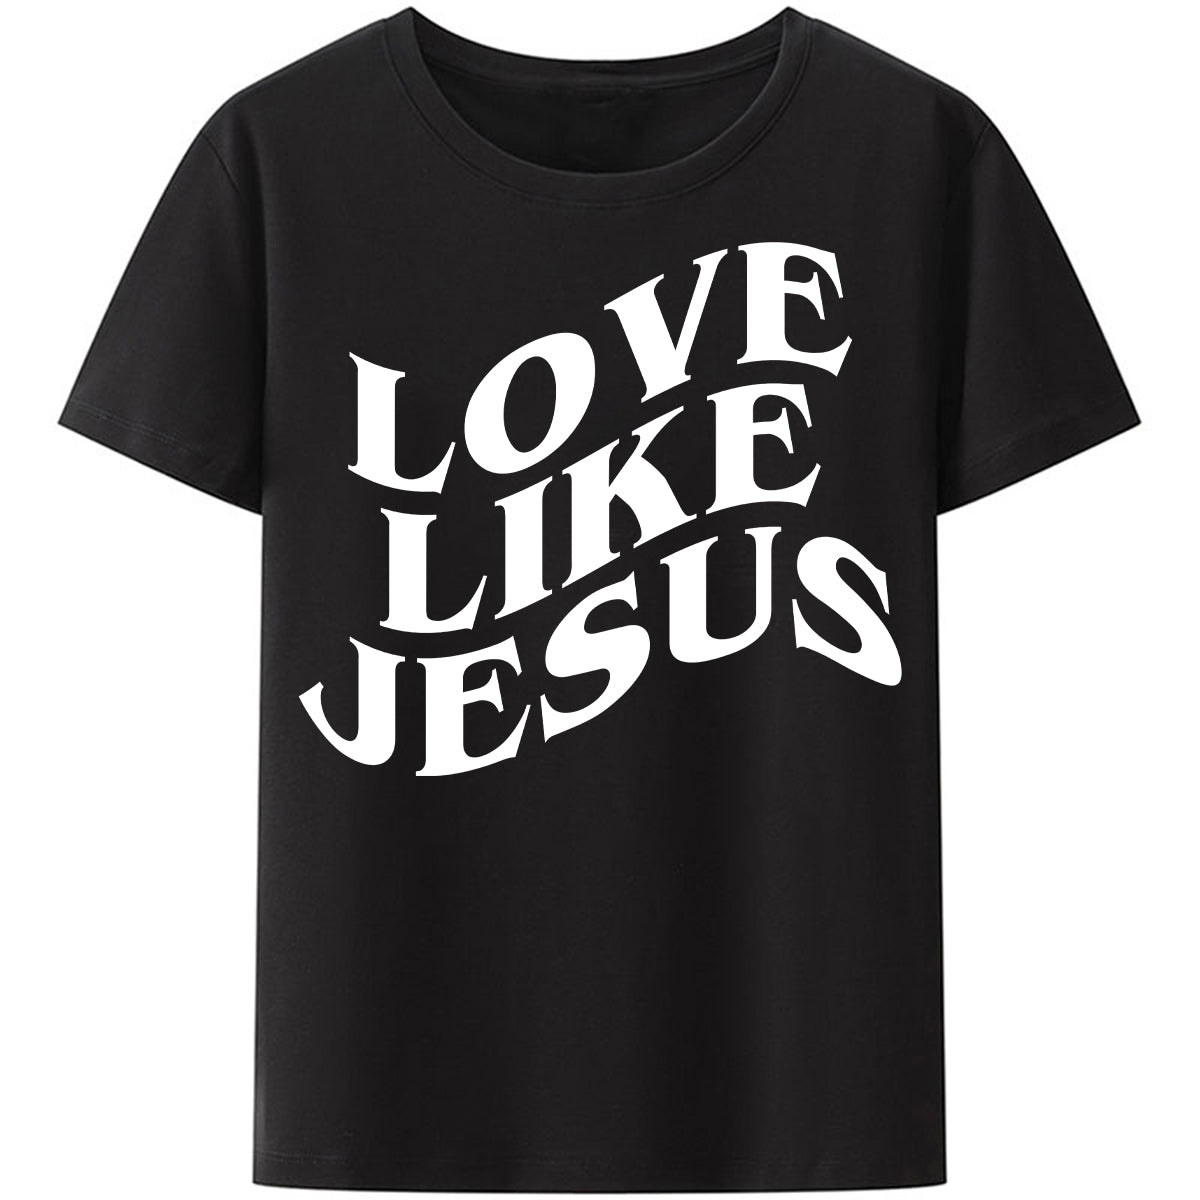 Christianartbag Funny T-Shirt, Christian Art Shirt, Love Like Jesus T-Shirt, Jesus T-Shirt, Unisex T-Shirt. - Christian Art Bag